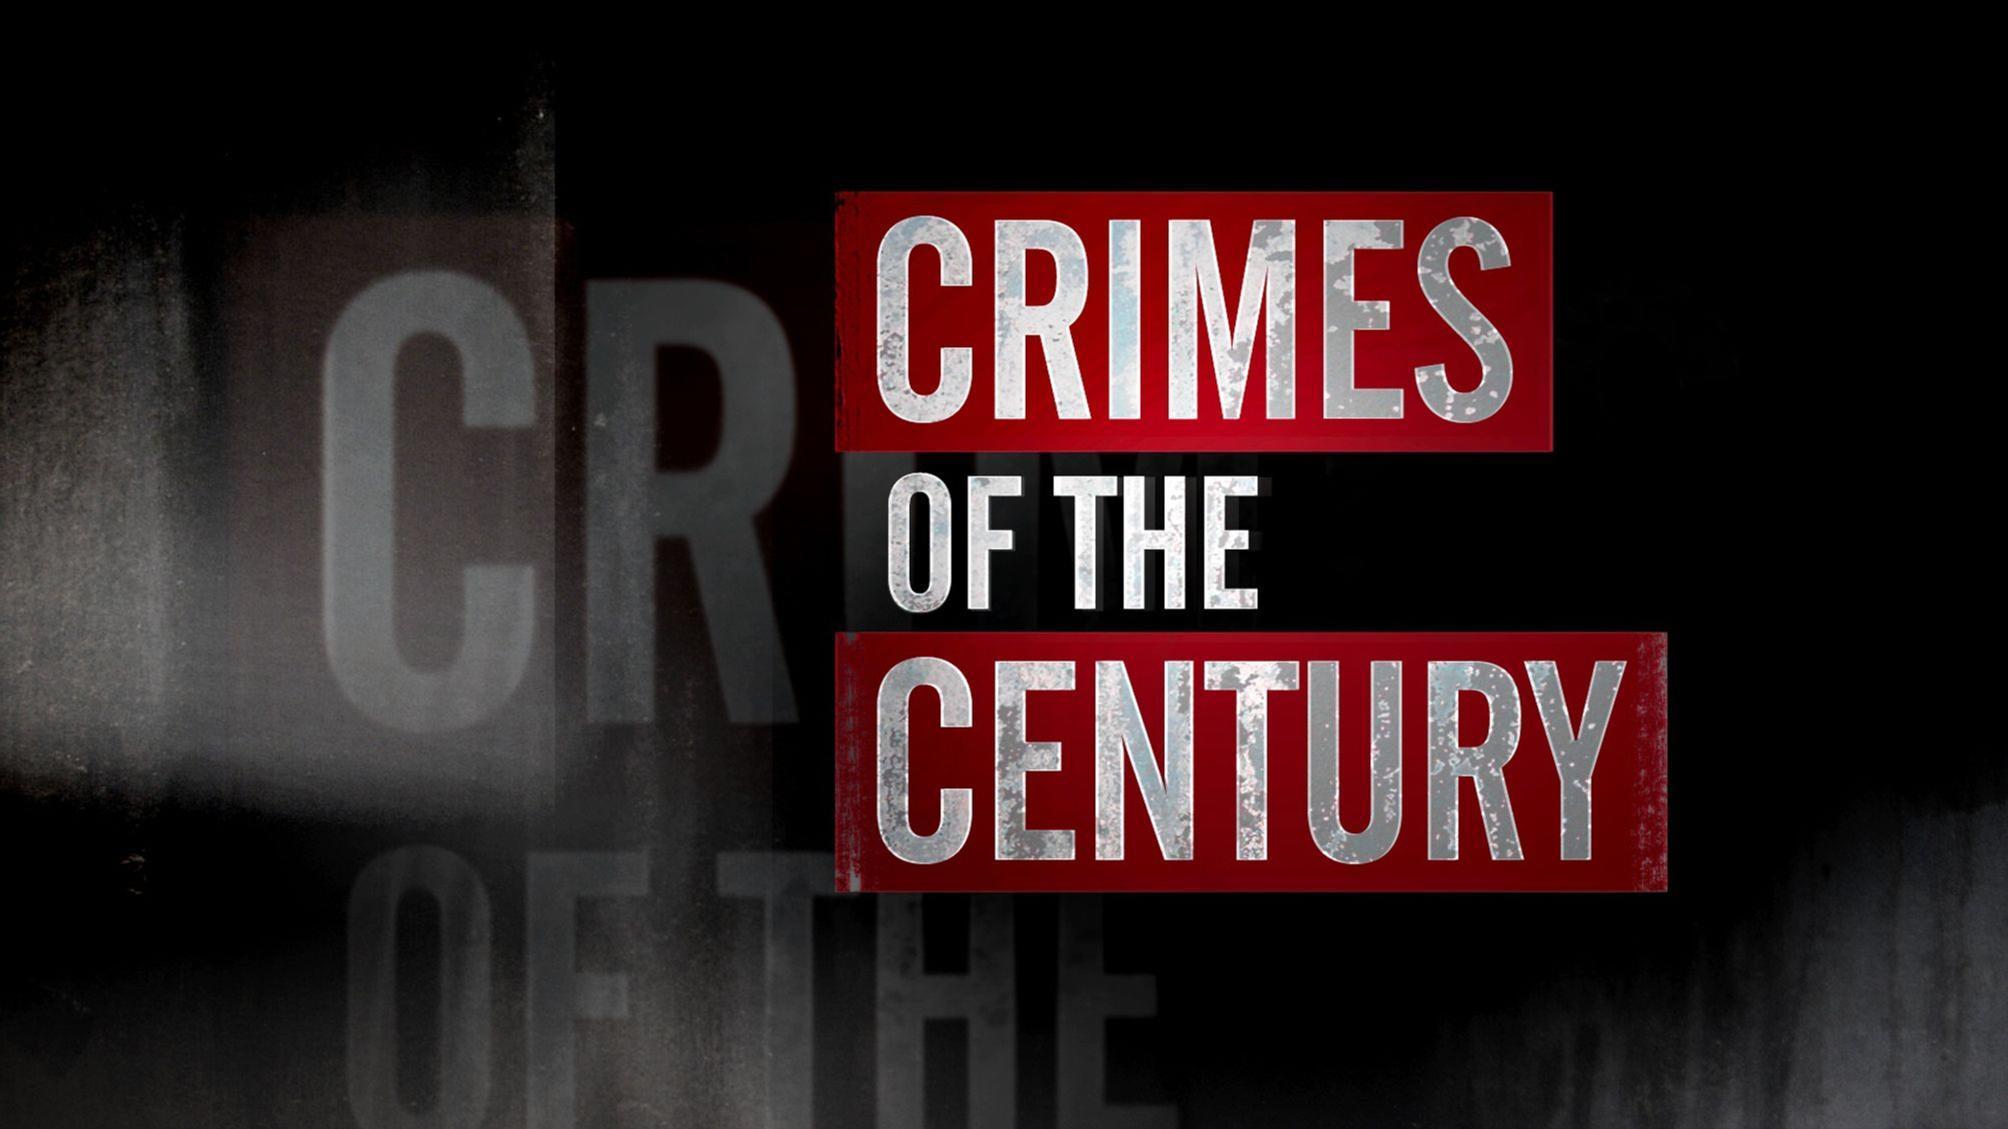 Ridley Scott's Crimes of the Century